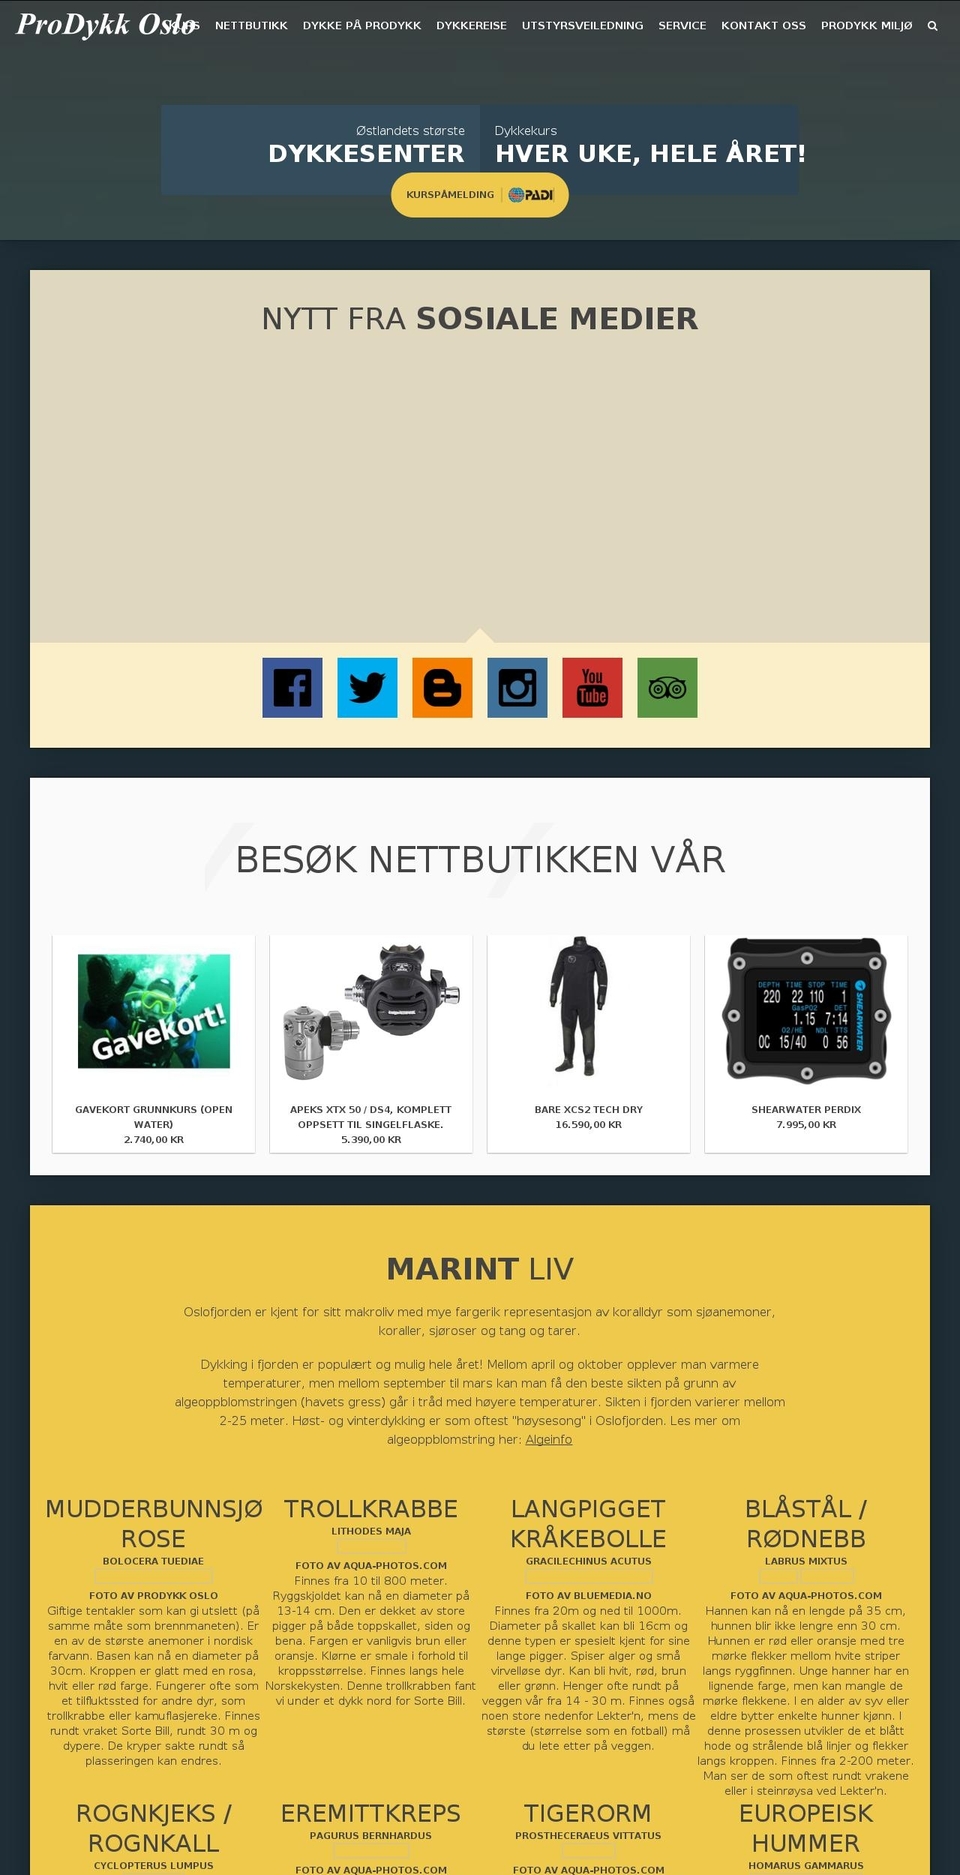 prodykk.no shopify website screenshot